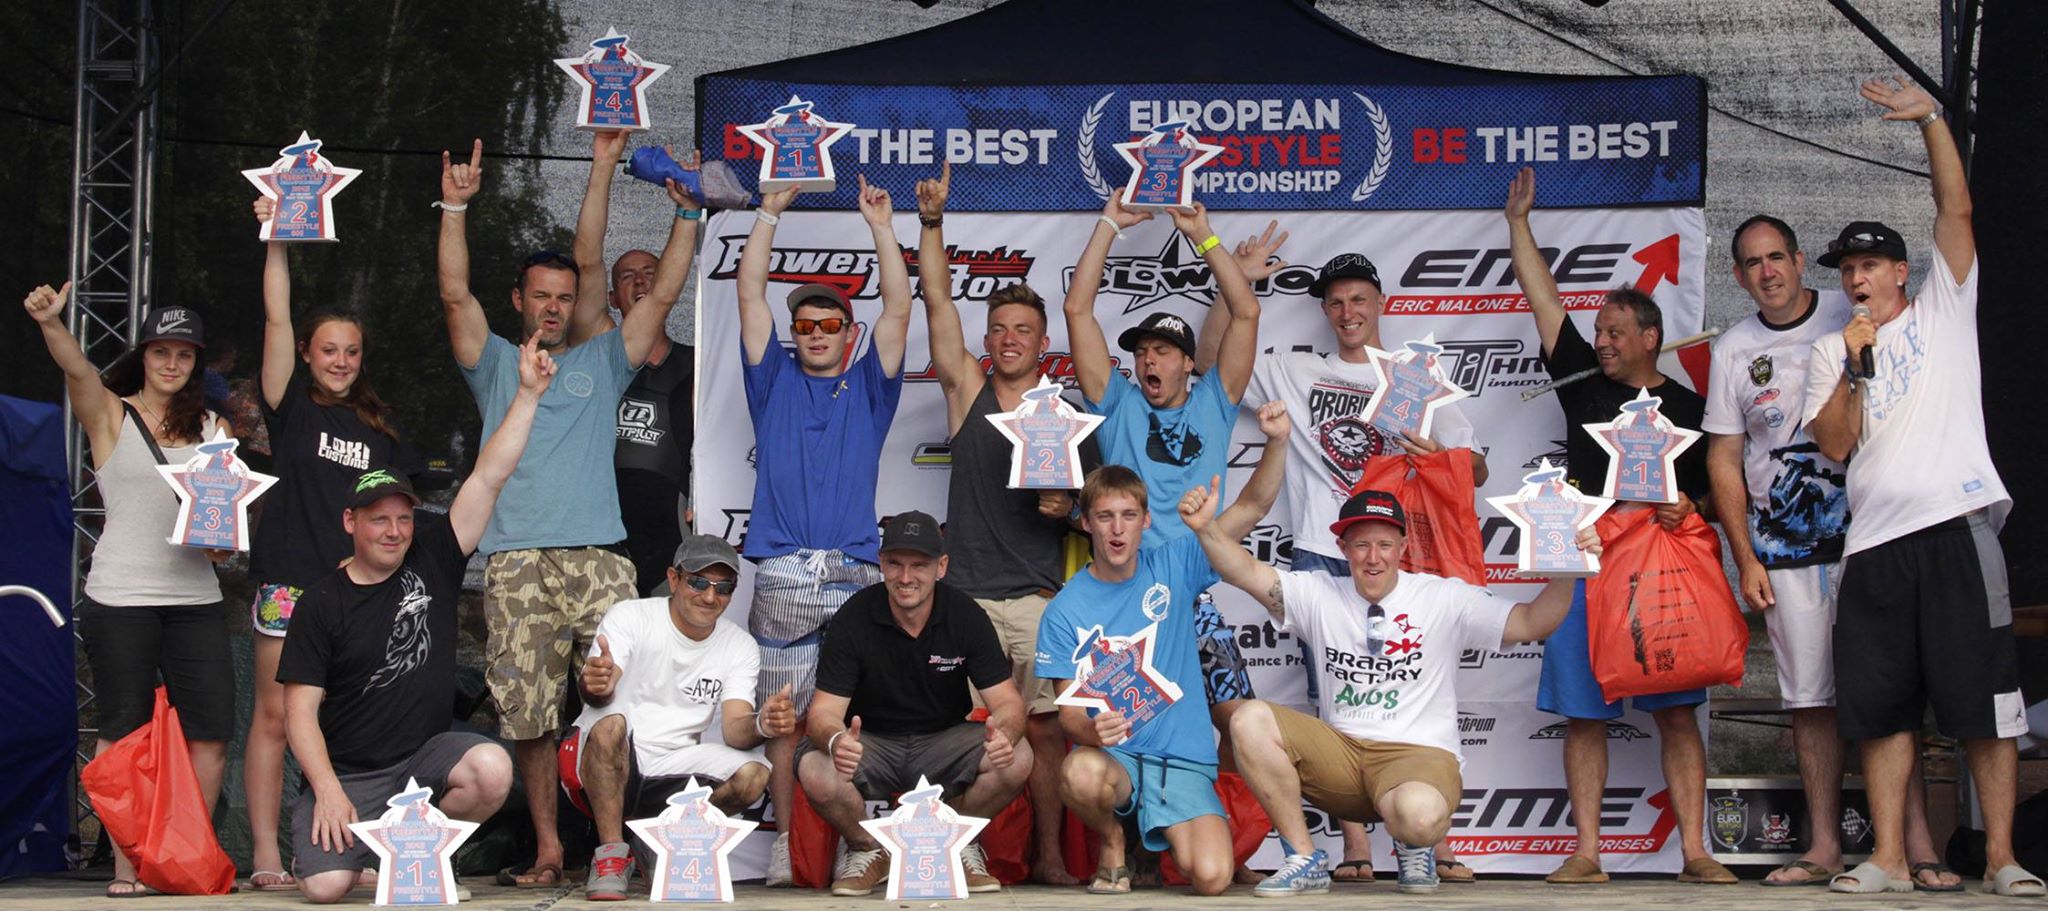 Jonathan Kavanagh won the European Freestyle Championship this weekend!